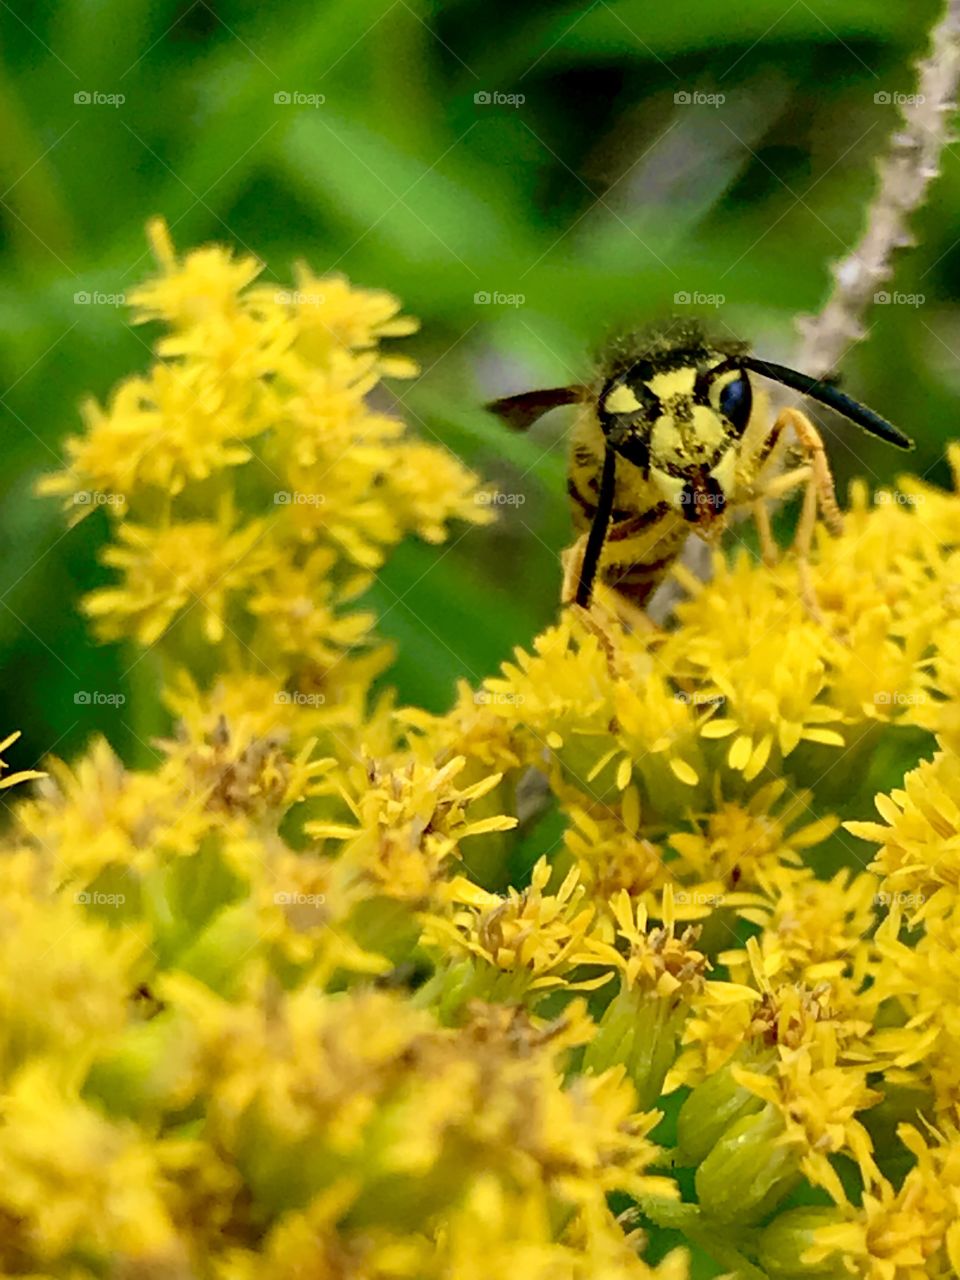 Wasp pollination 